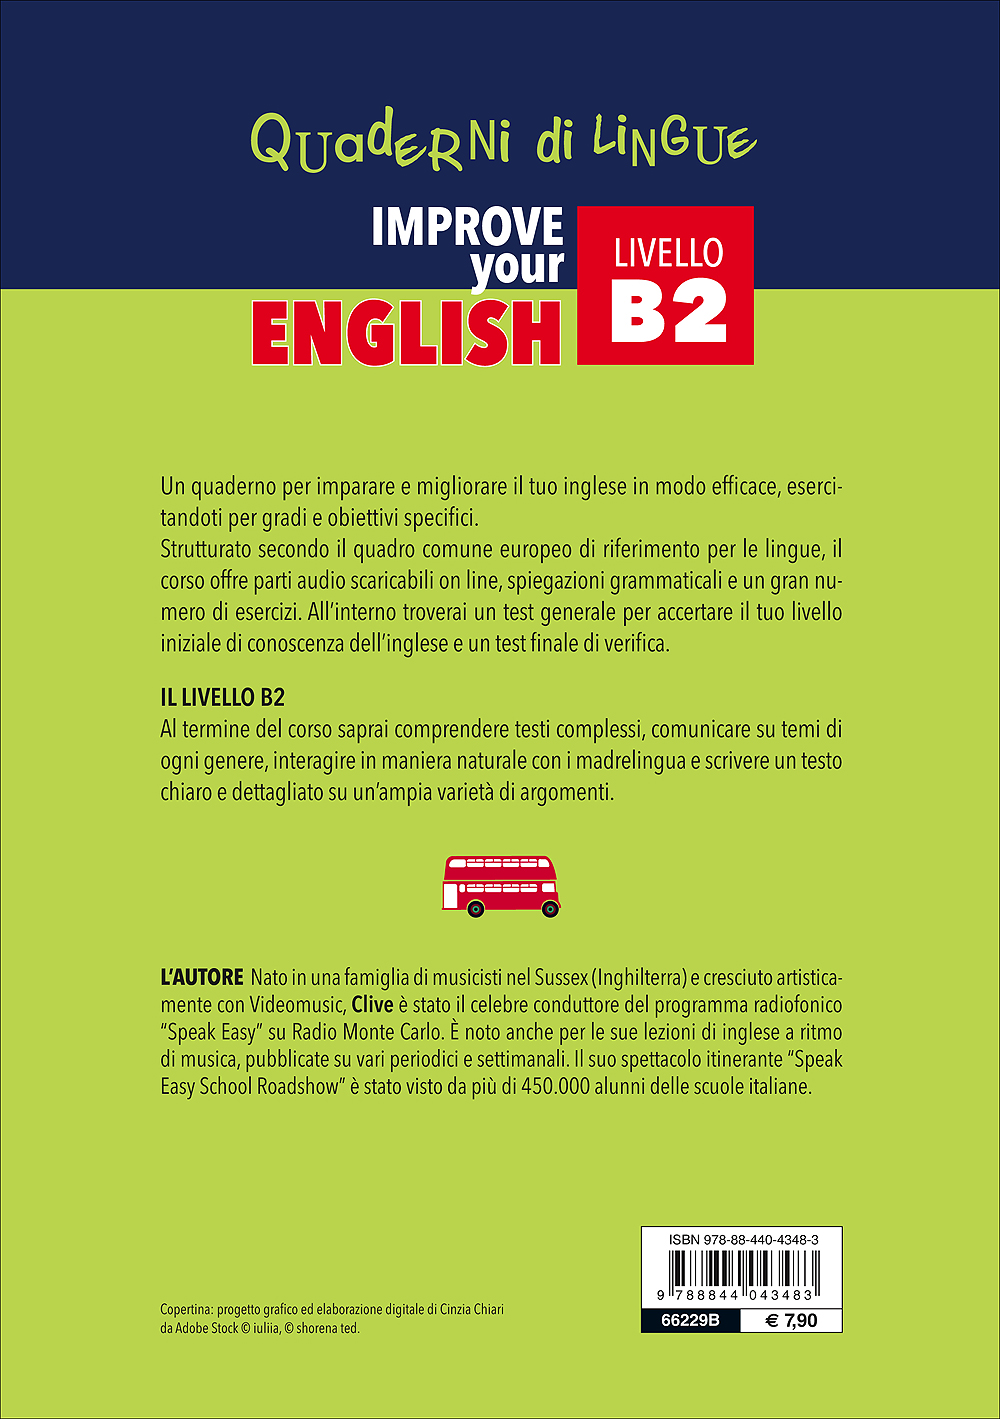 Improve your English B2